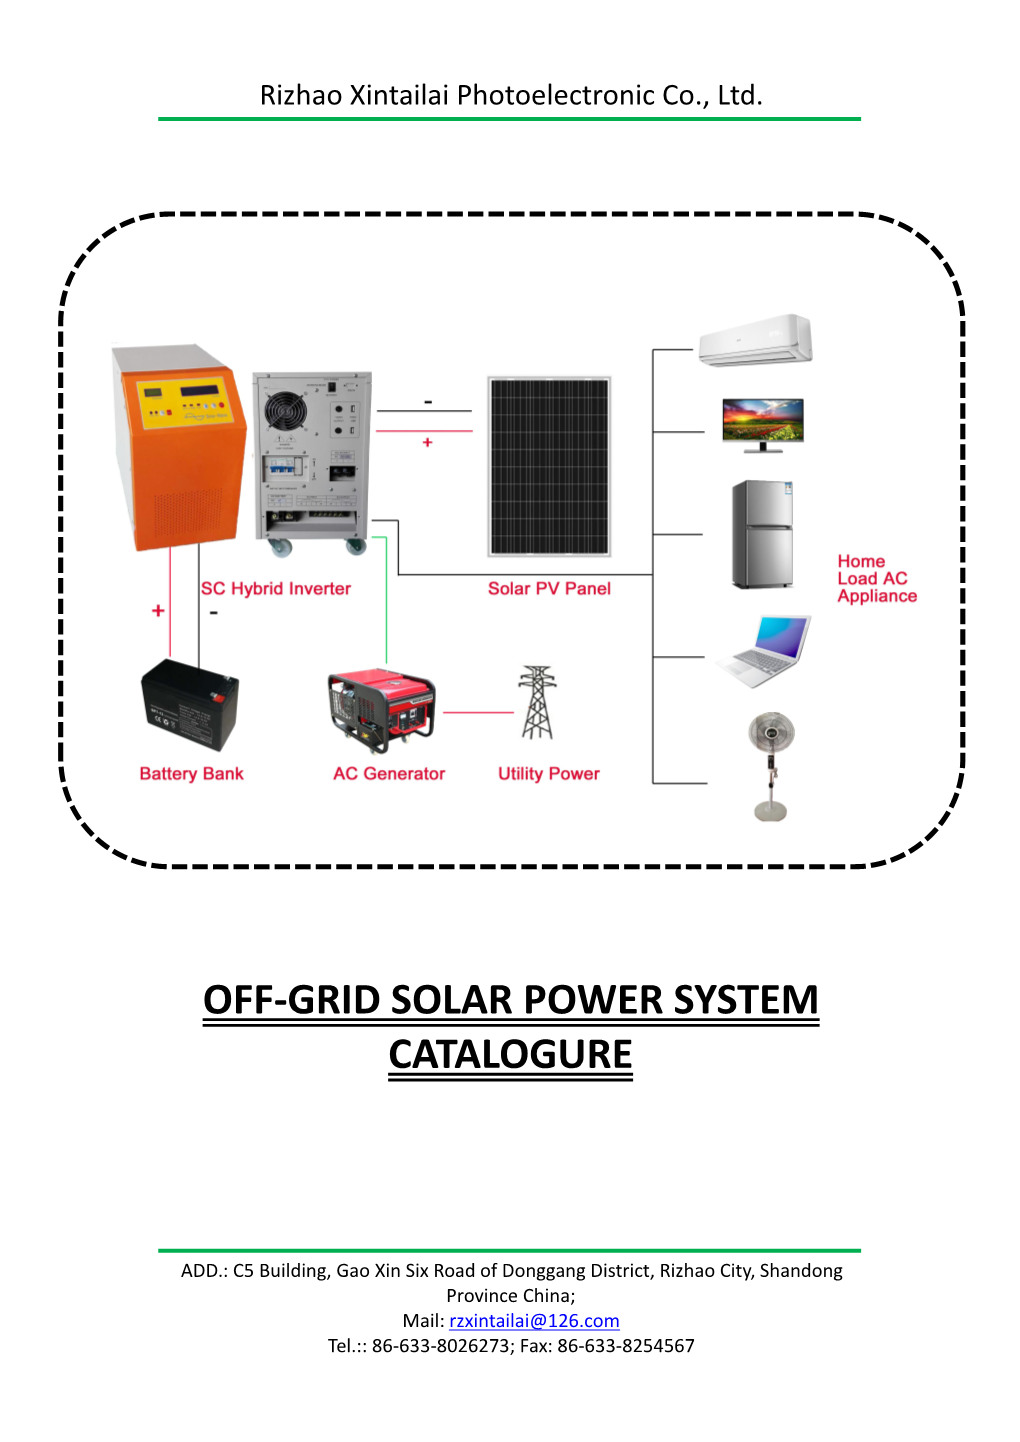 Off-Grid Solar Power System Catalogure